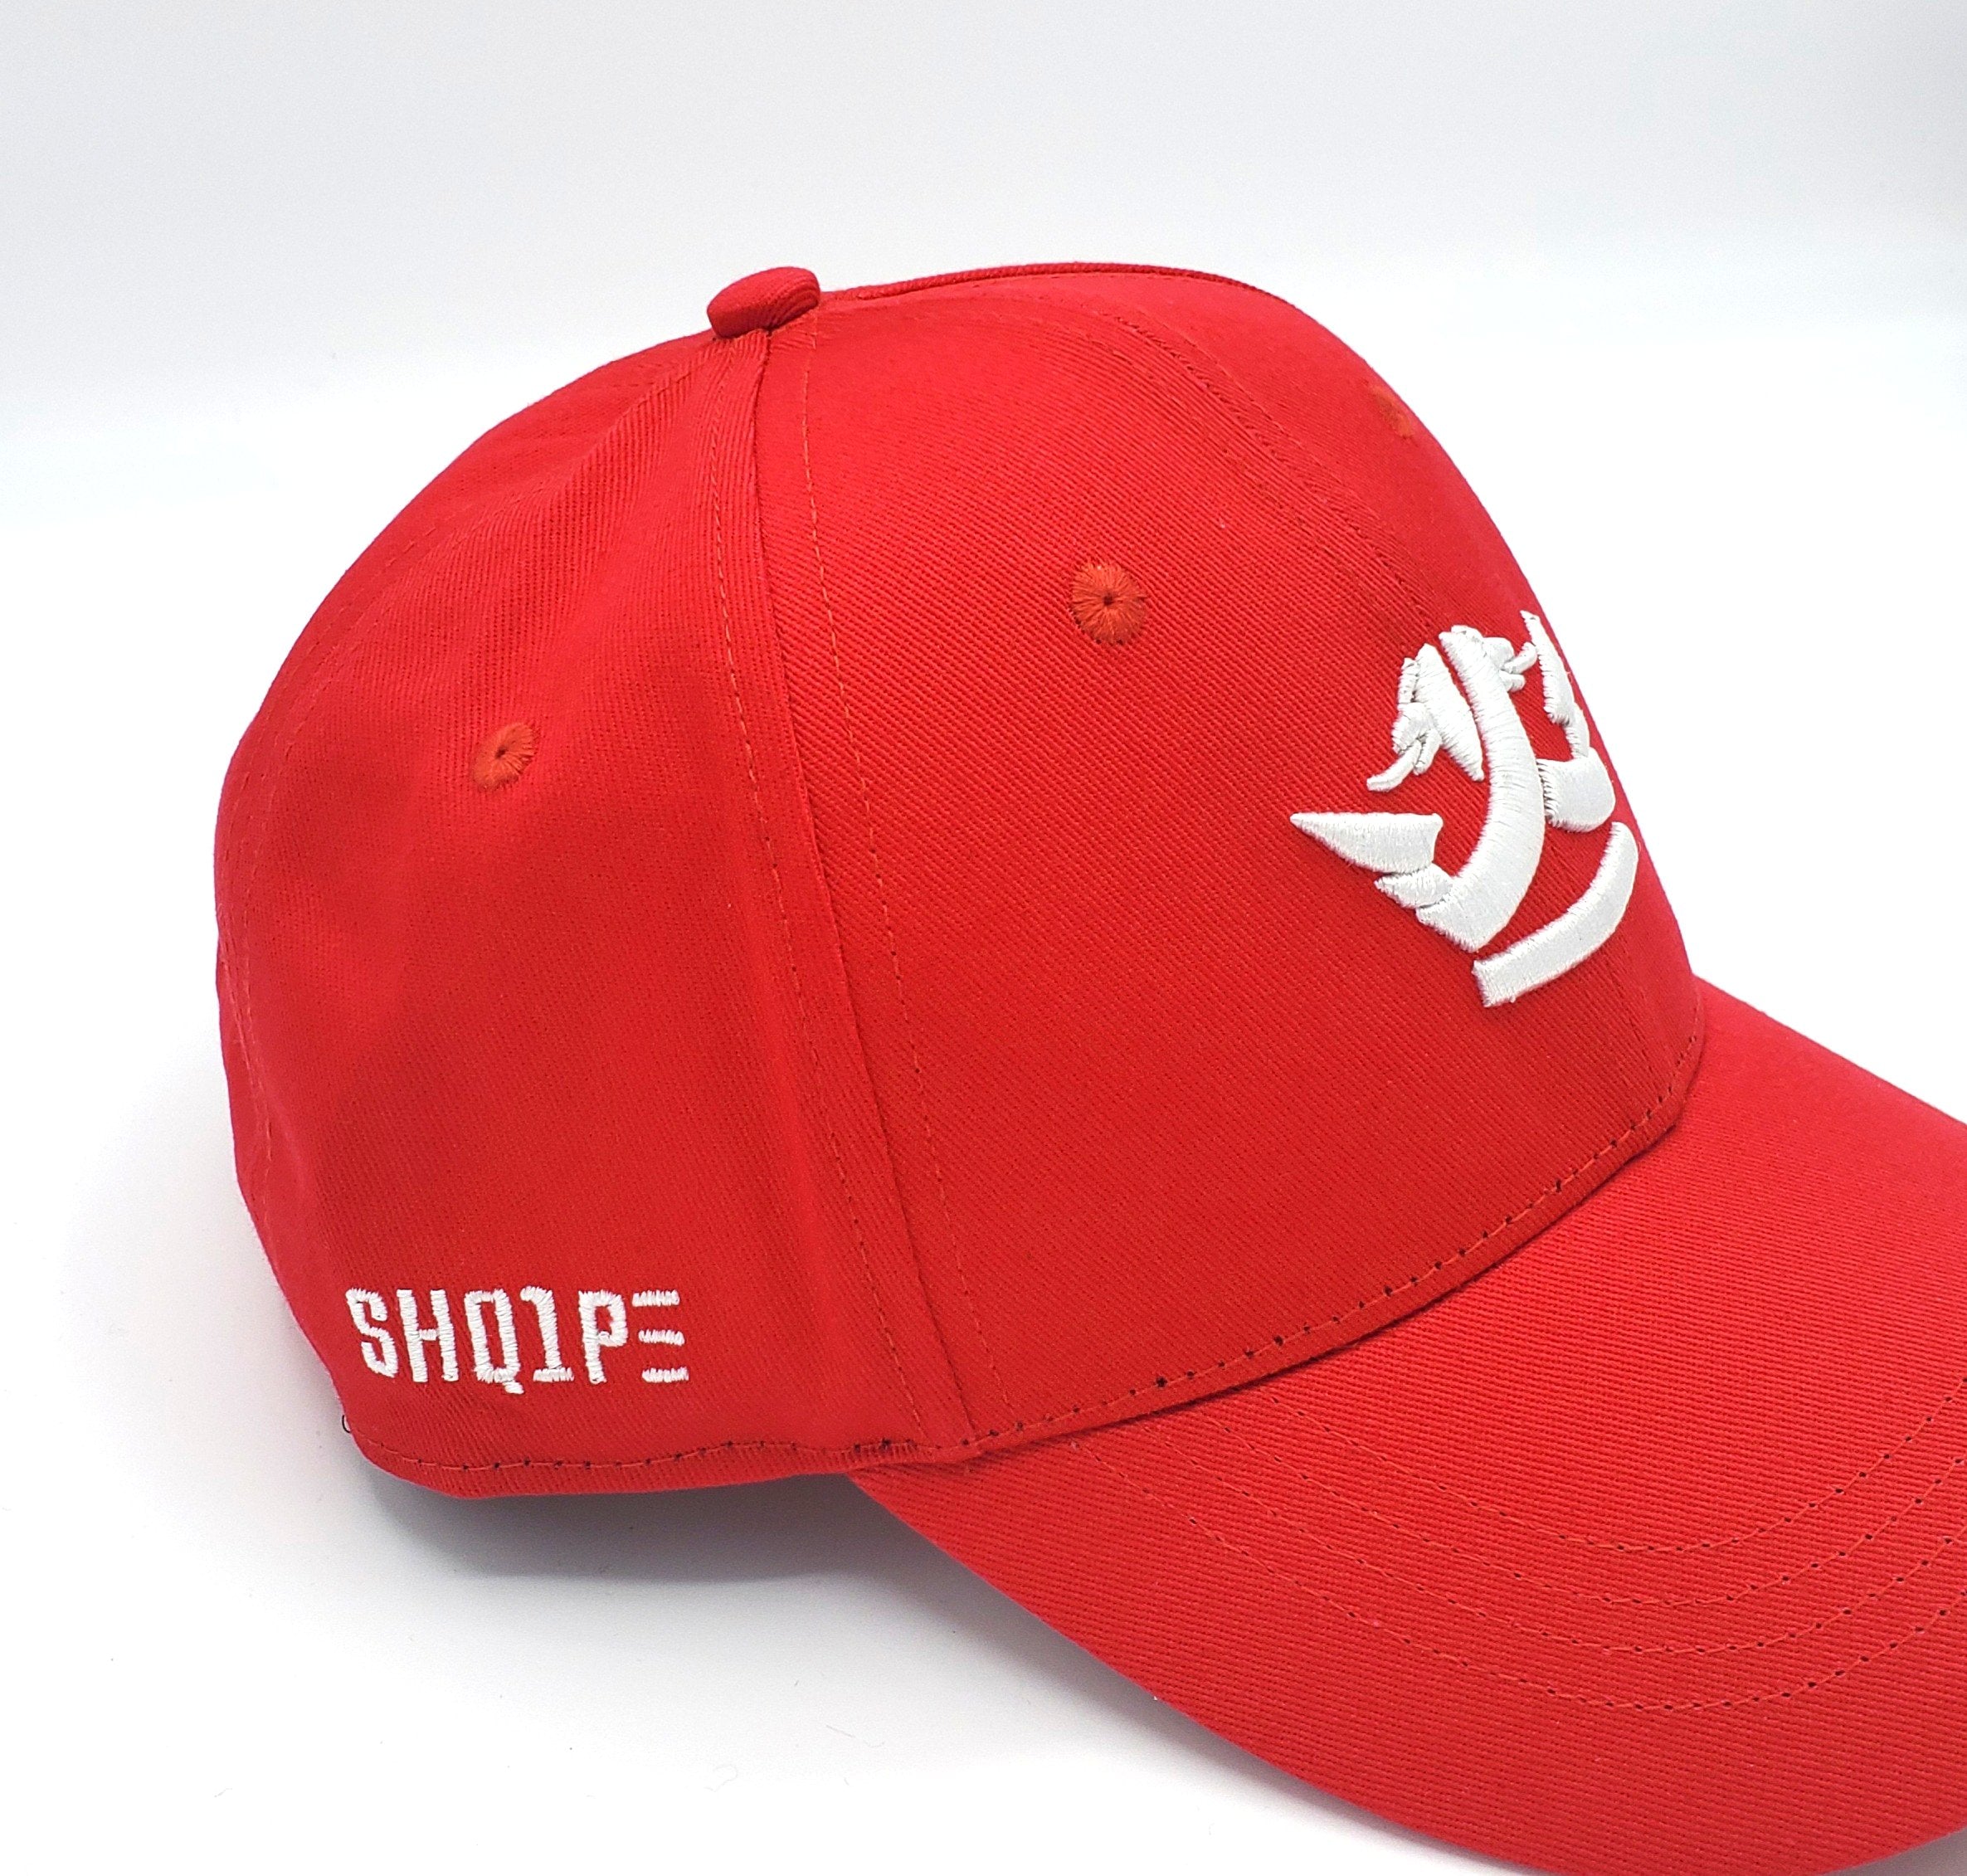 Shq1pe Baseball Jersey- Bright Red – SHQ1PE.CO